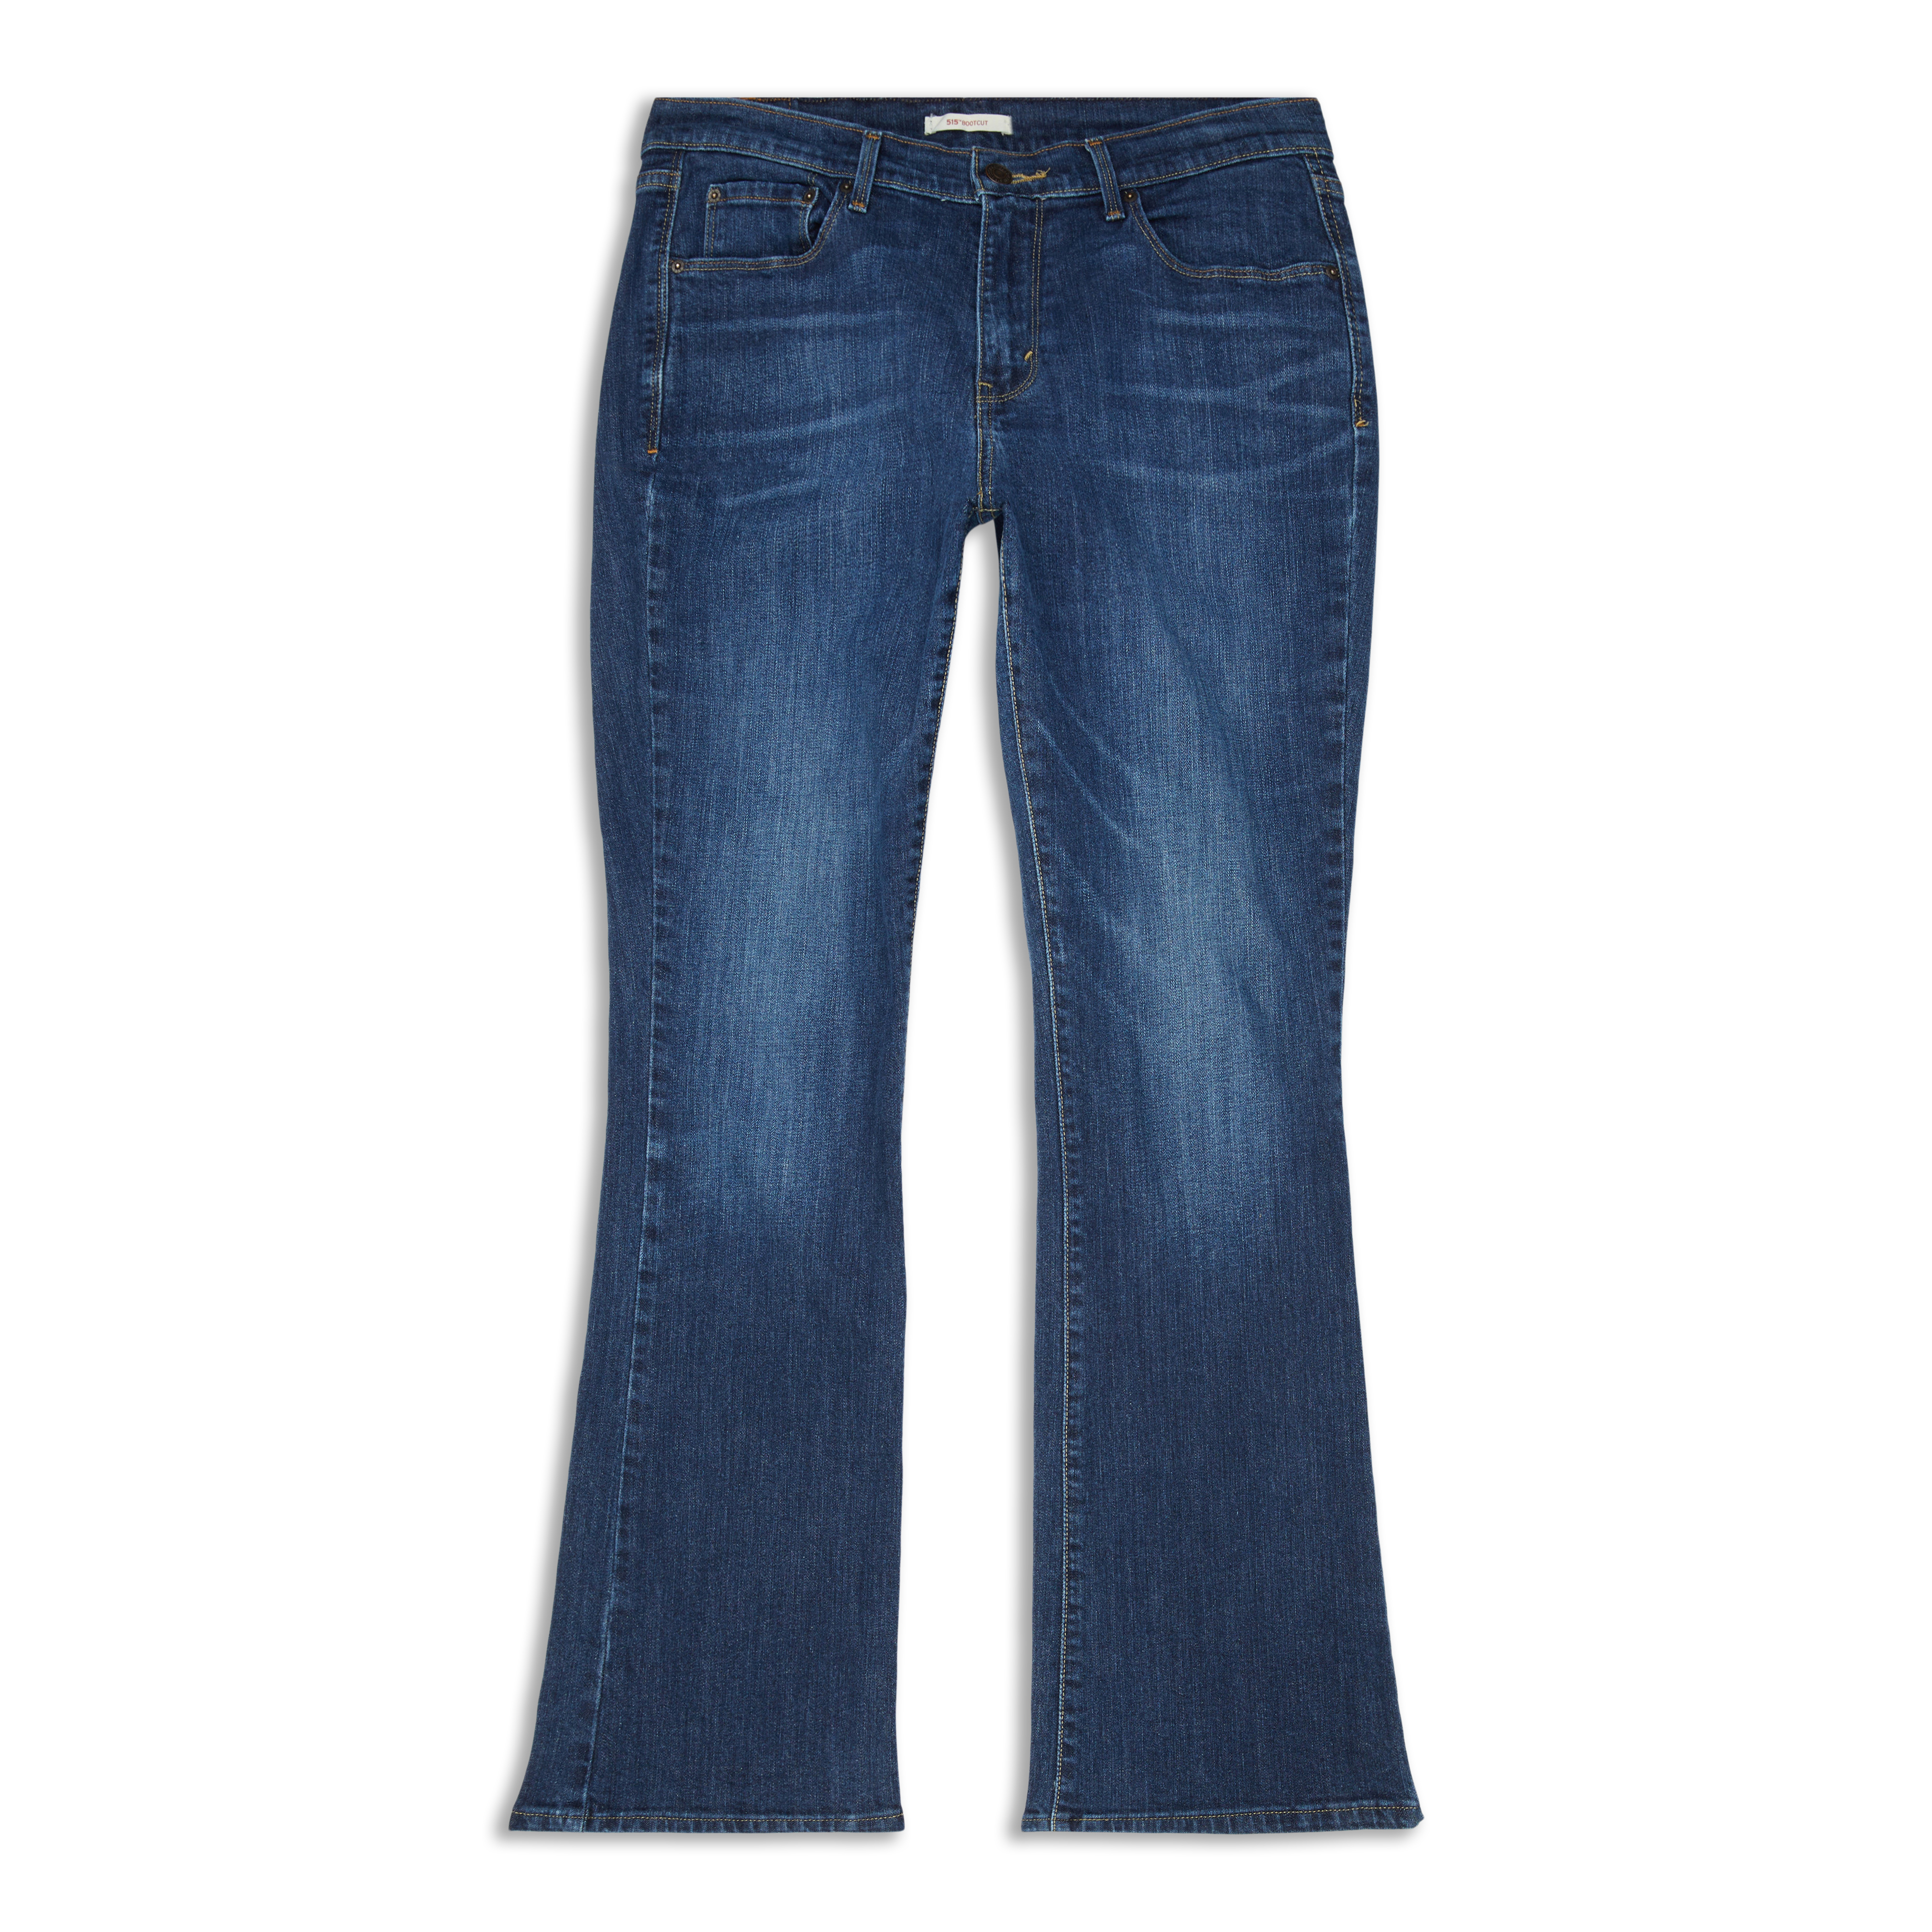 Levis 515 Bootcut Women's Jeans Light/Pastel Blu